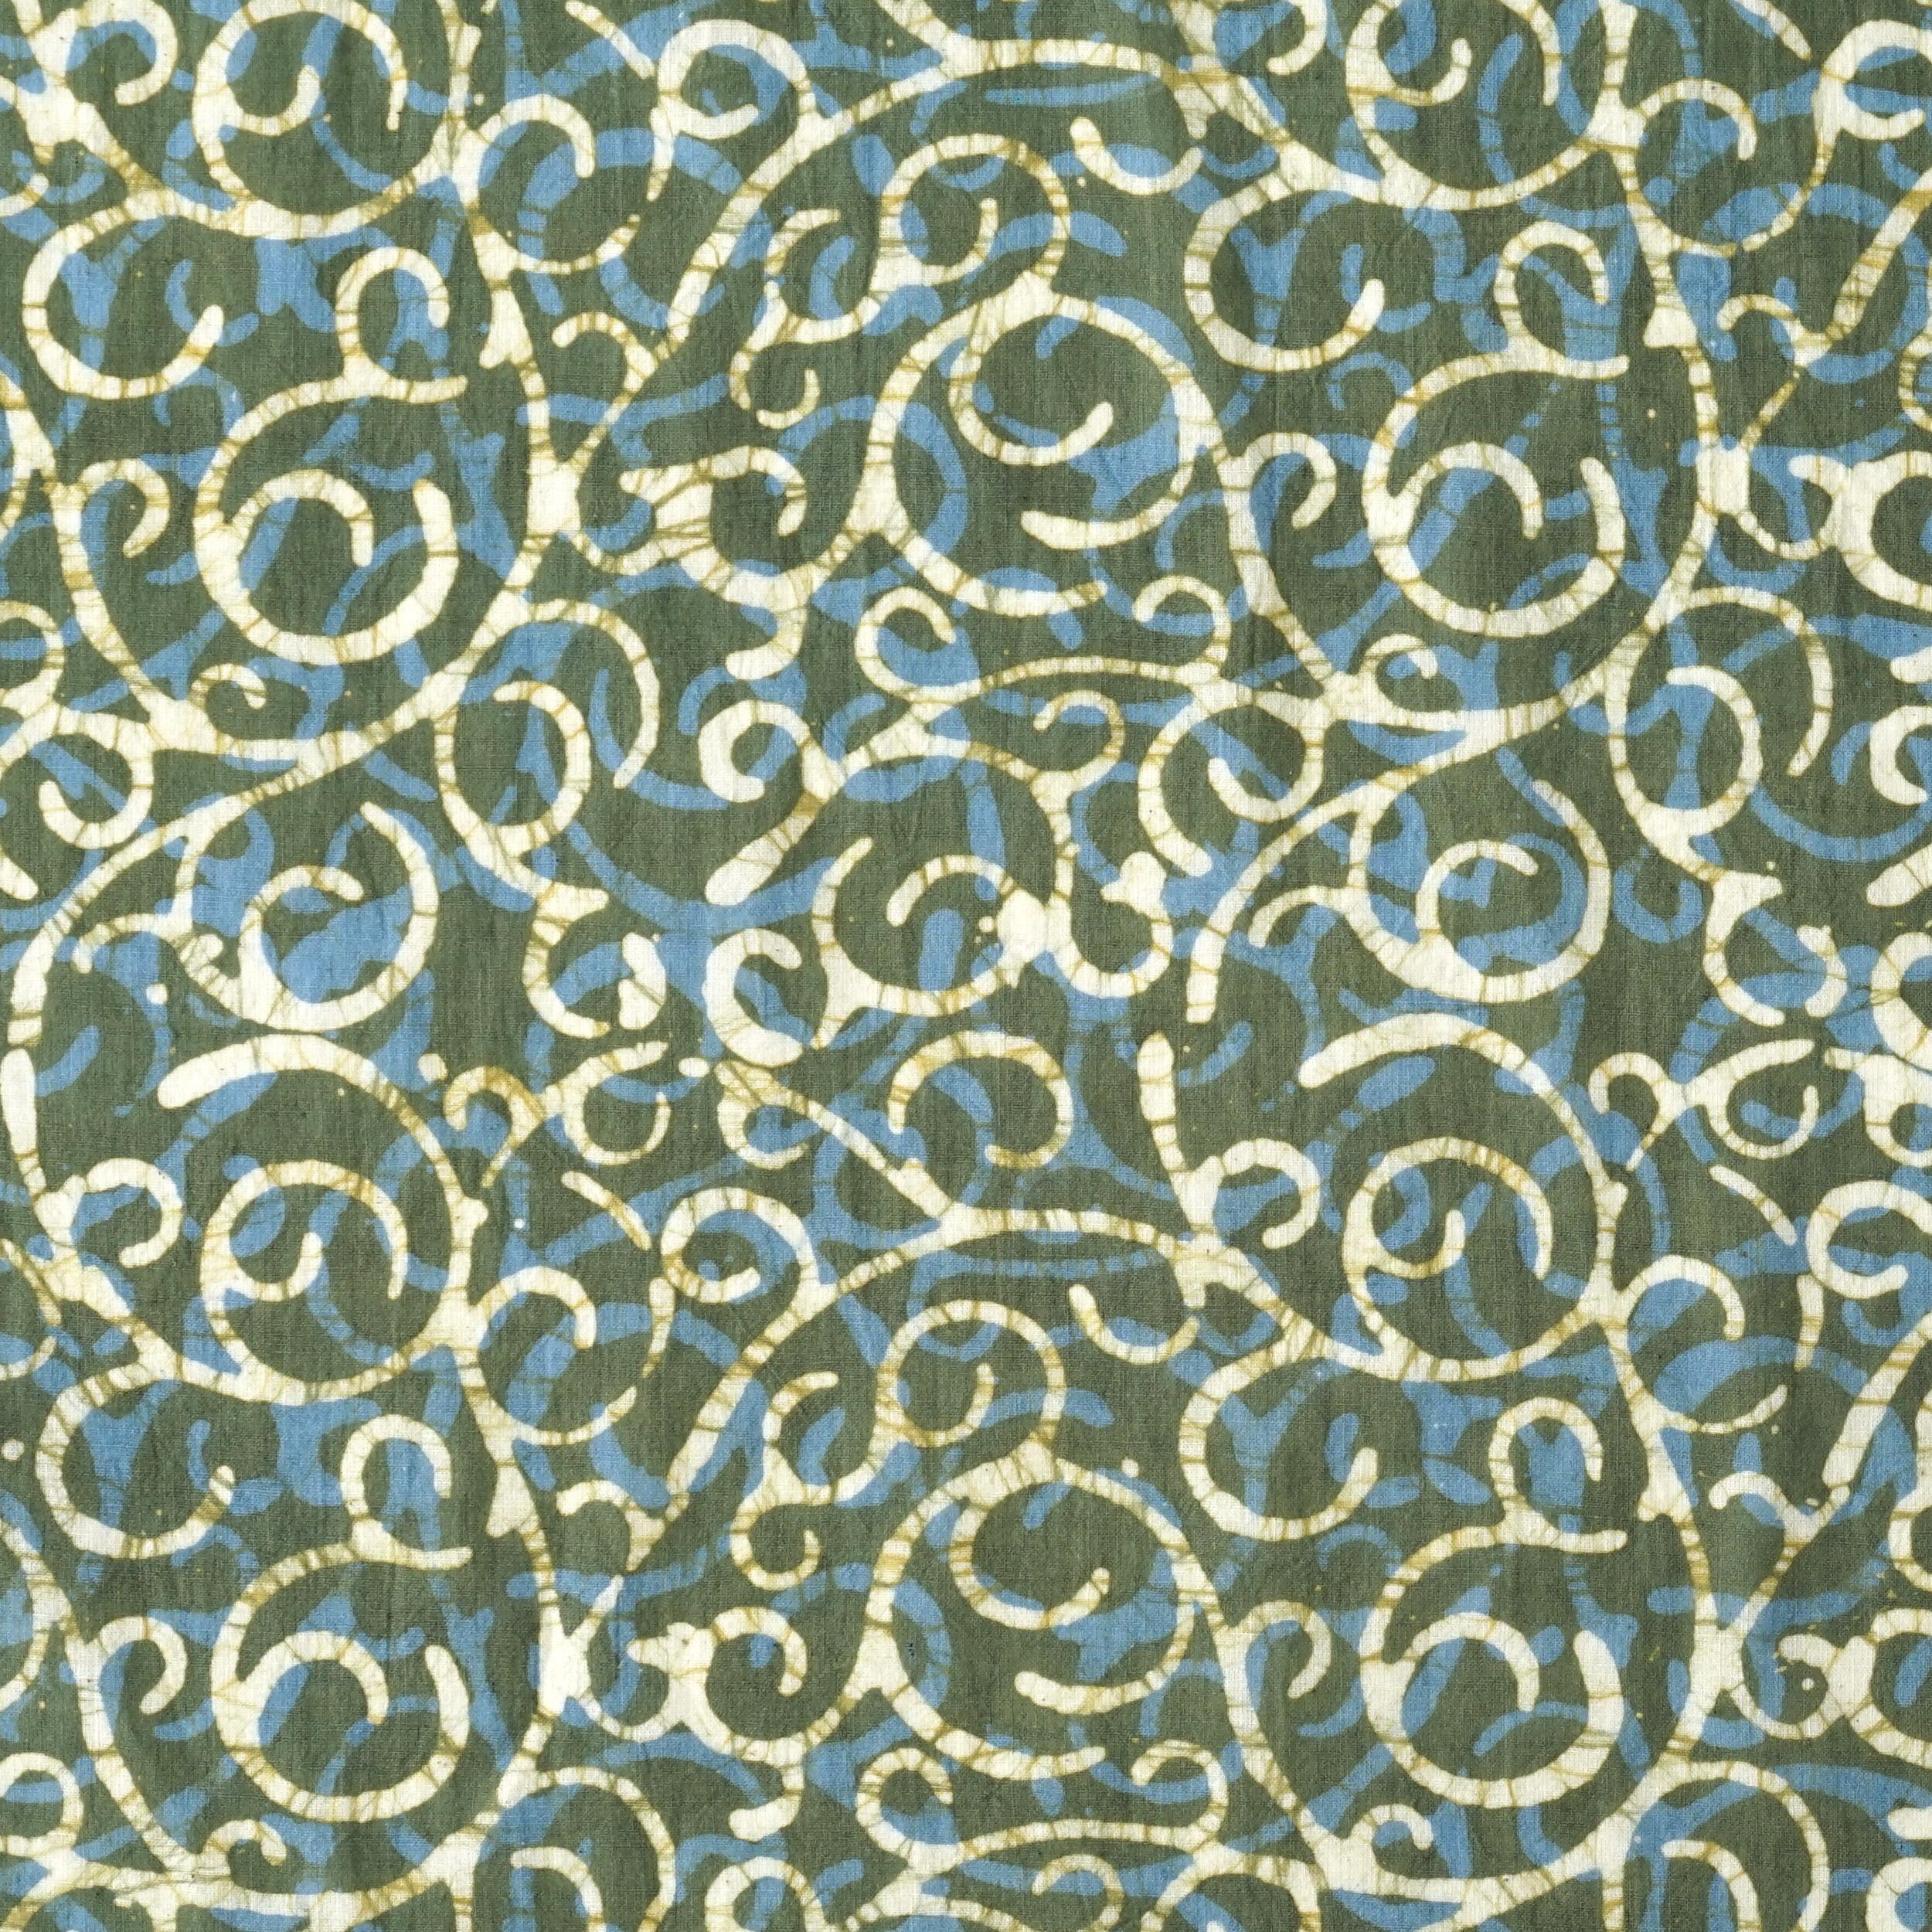 Block-Printed Batik Cotton Fabric From India - Aurora Design - Reactive Dye - Flat